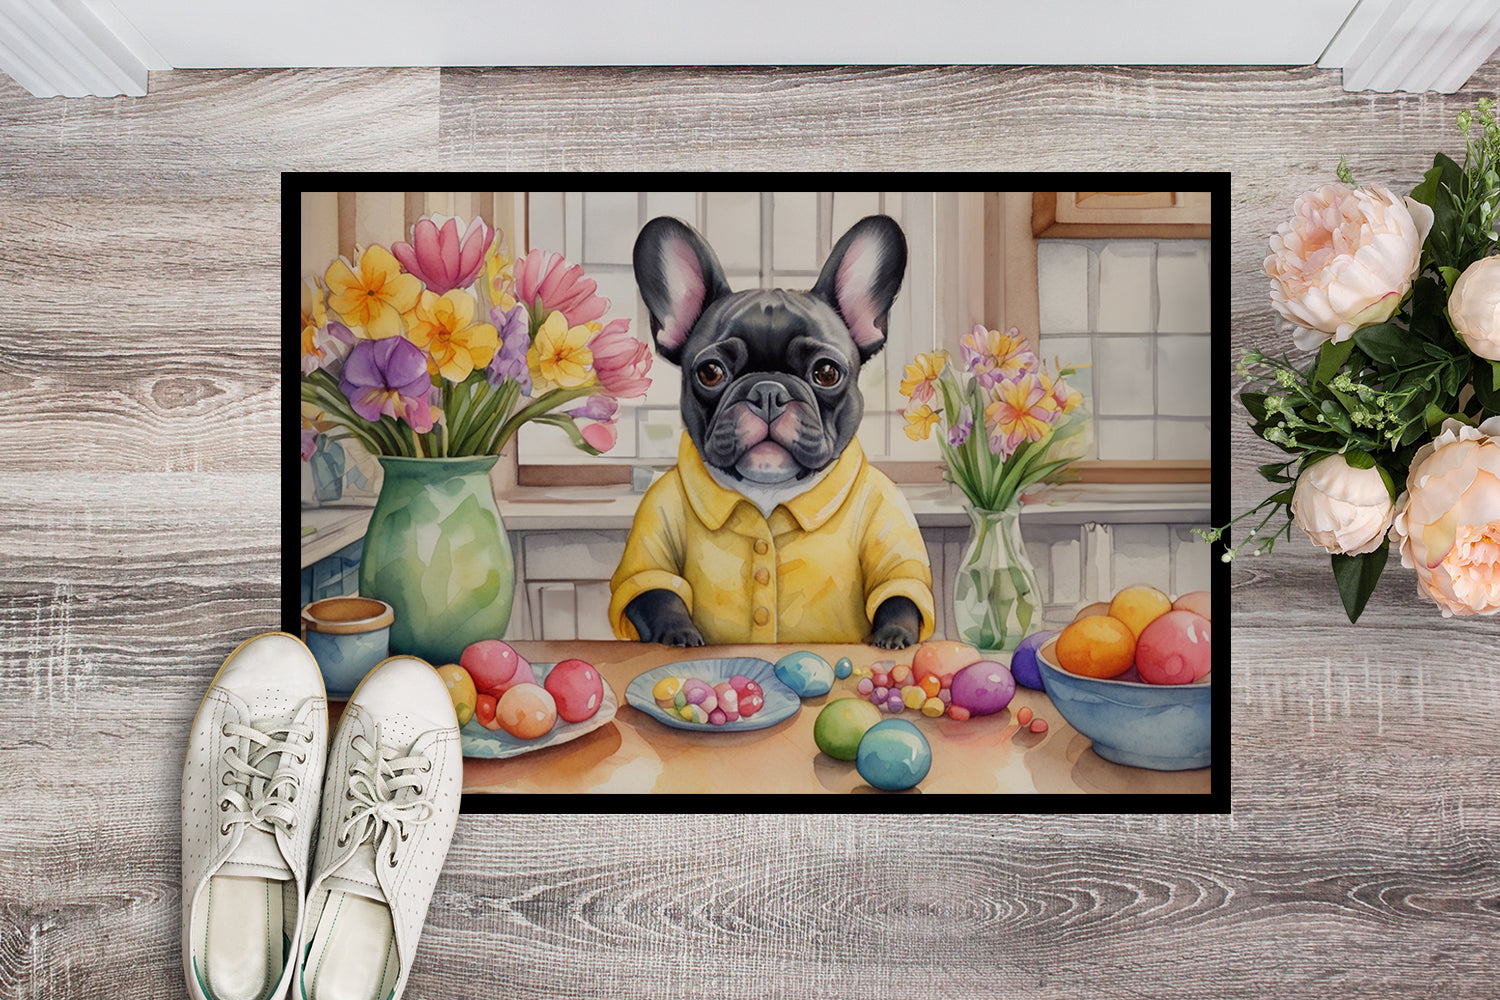 Buy this Decorating Easter French Bulldog Doormat